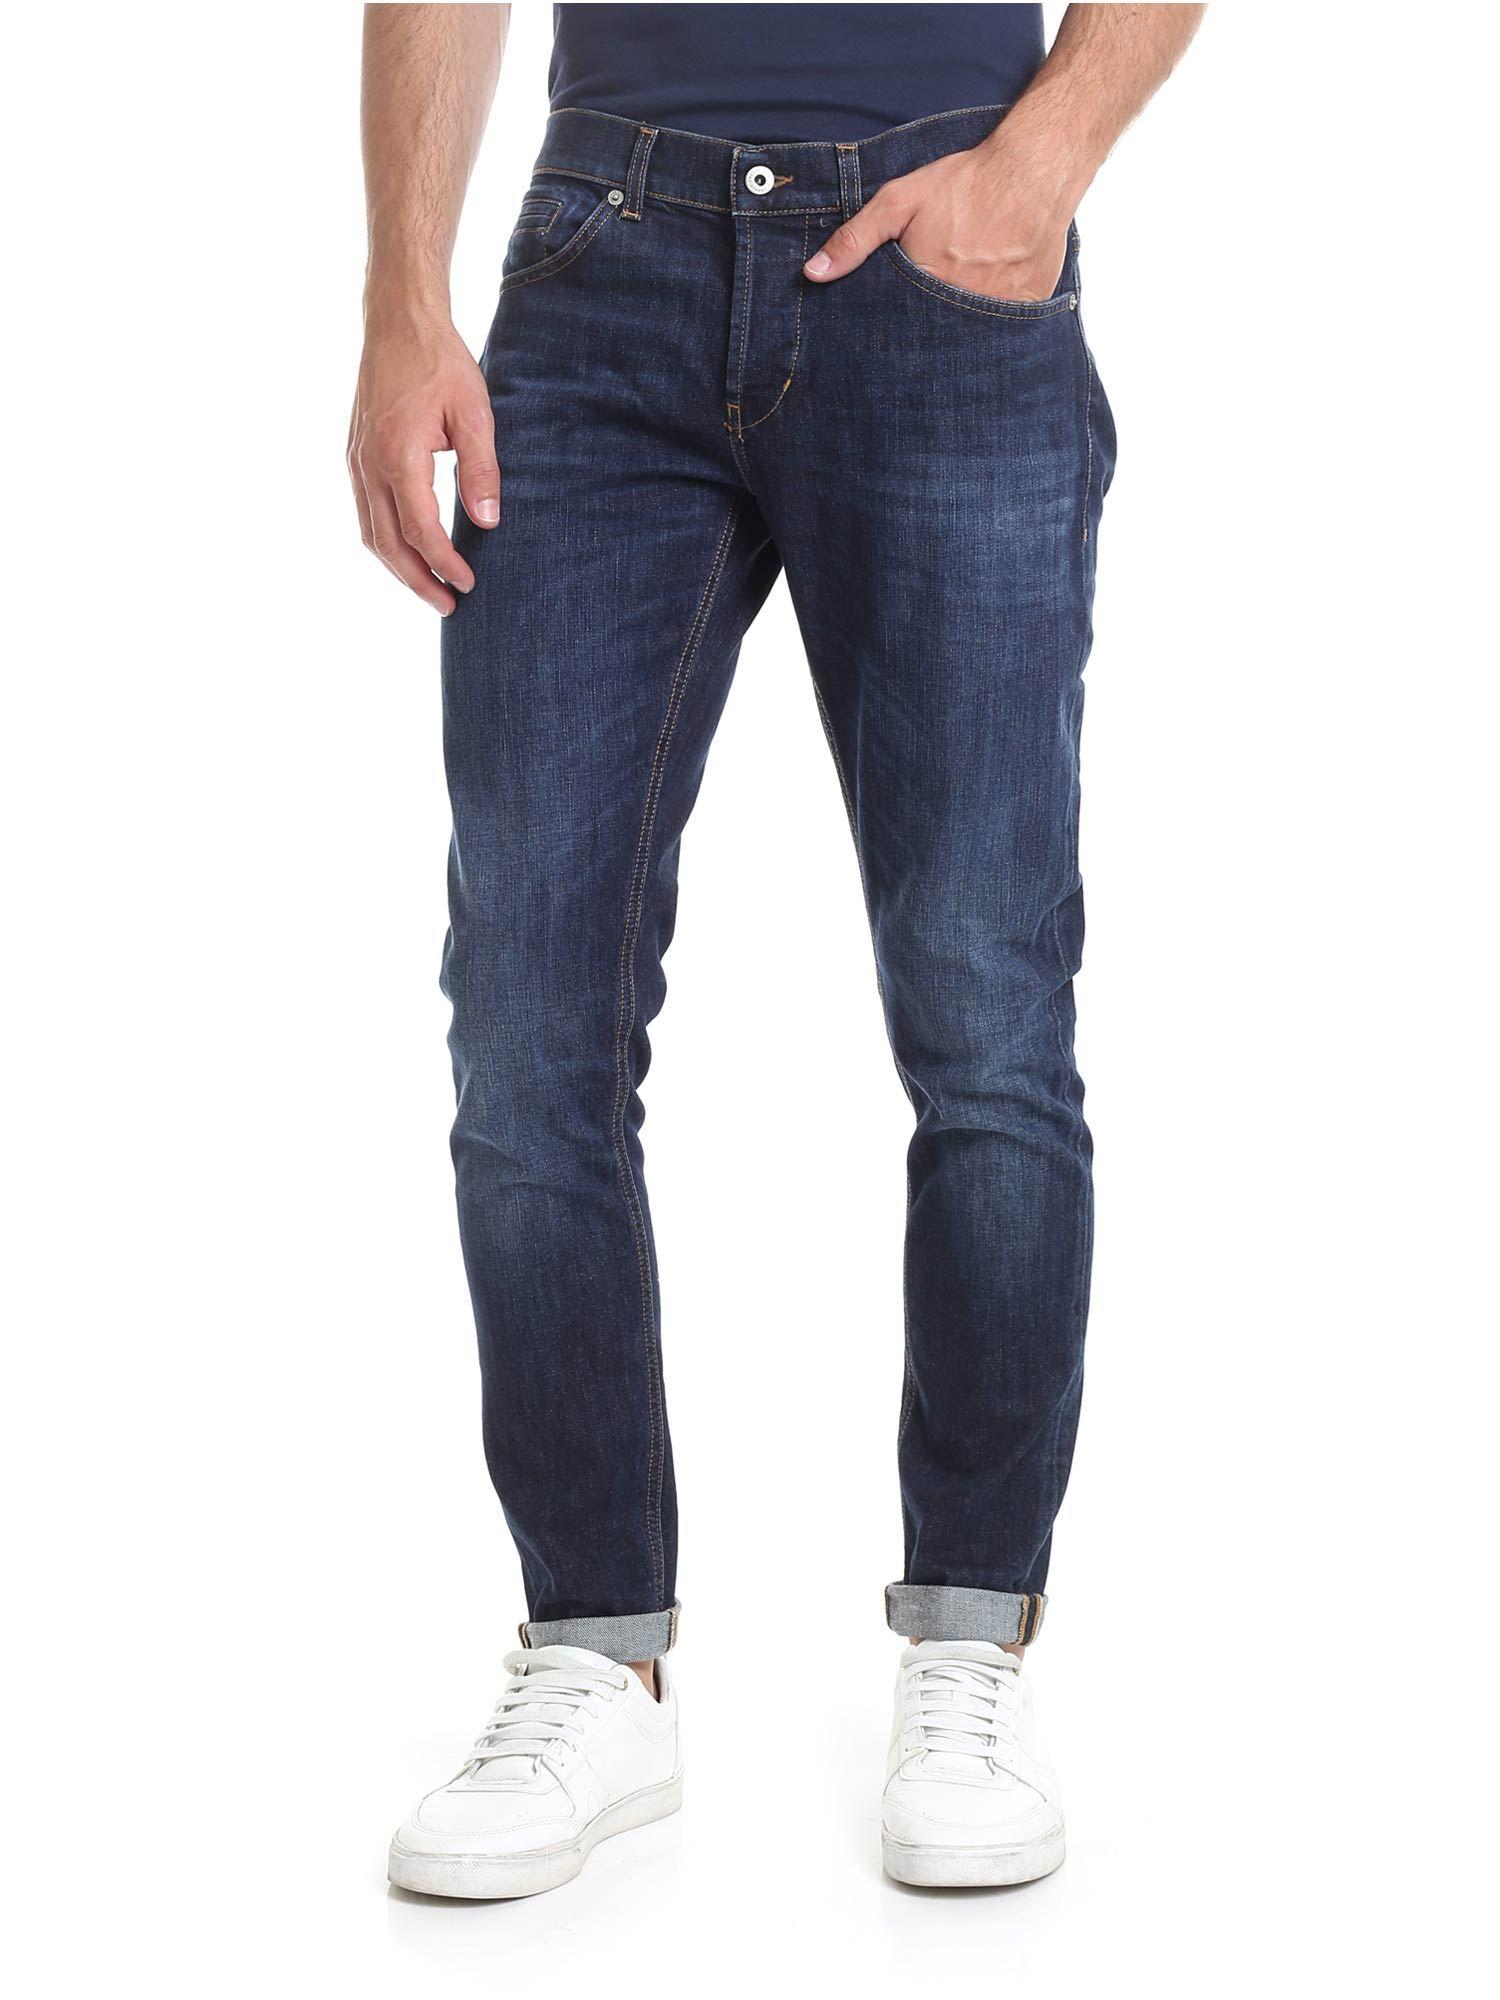 Dondup Denim George Jeans In Dark Blue for Men - Lyst